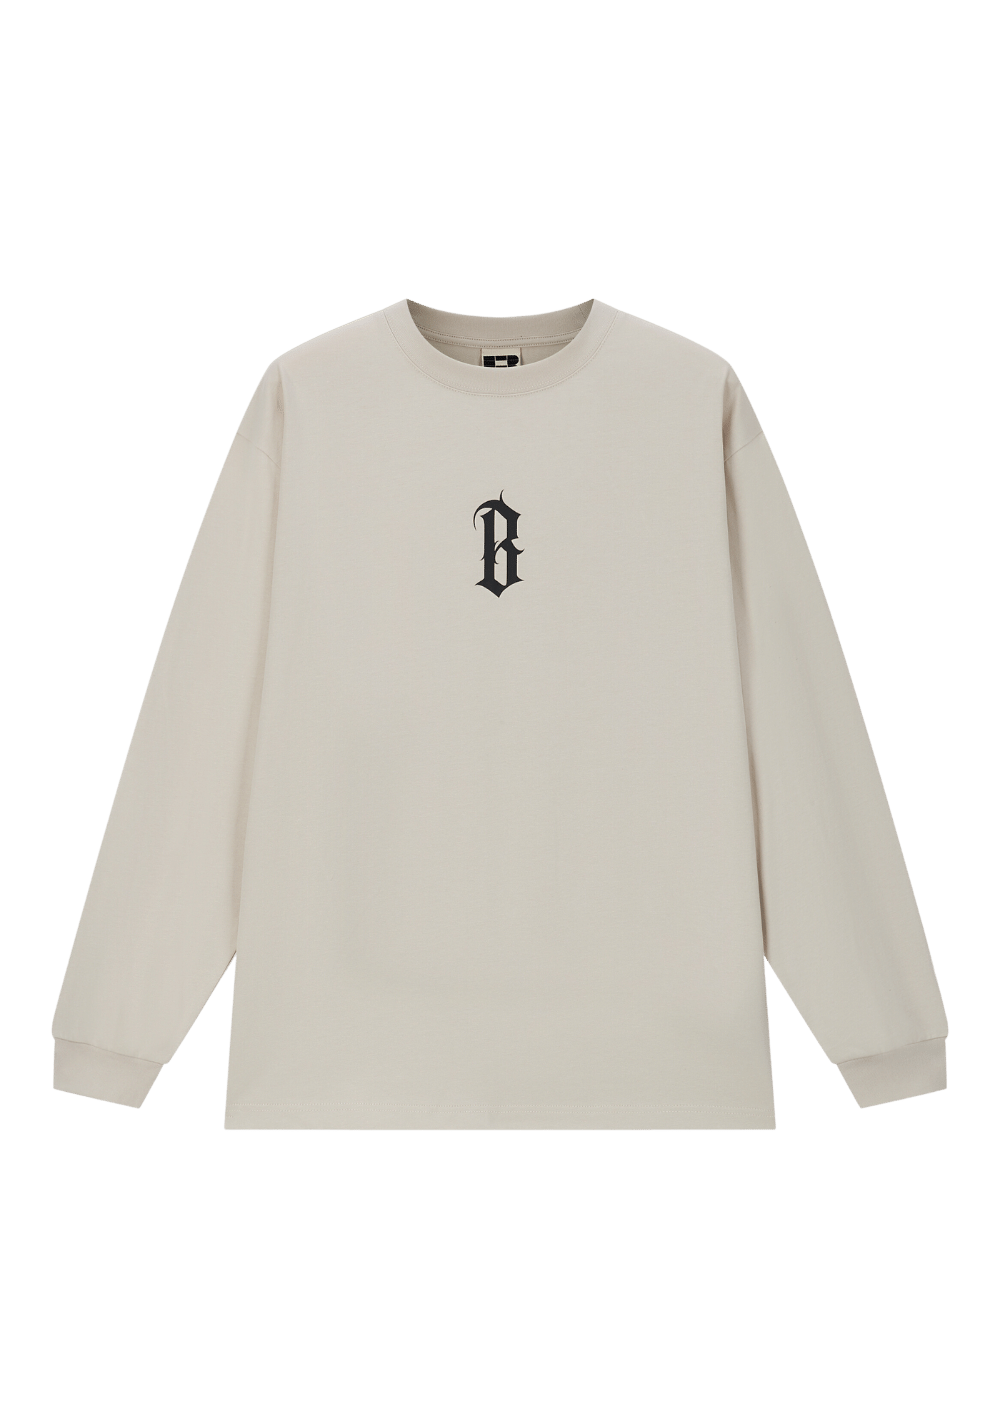 Gothic Font classic Logo Sweatshirt - PSYLOS 1, Gothic Font classic Logo Sweatshirt, Sweatshirts, Boneless, PSYLOS 1